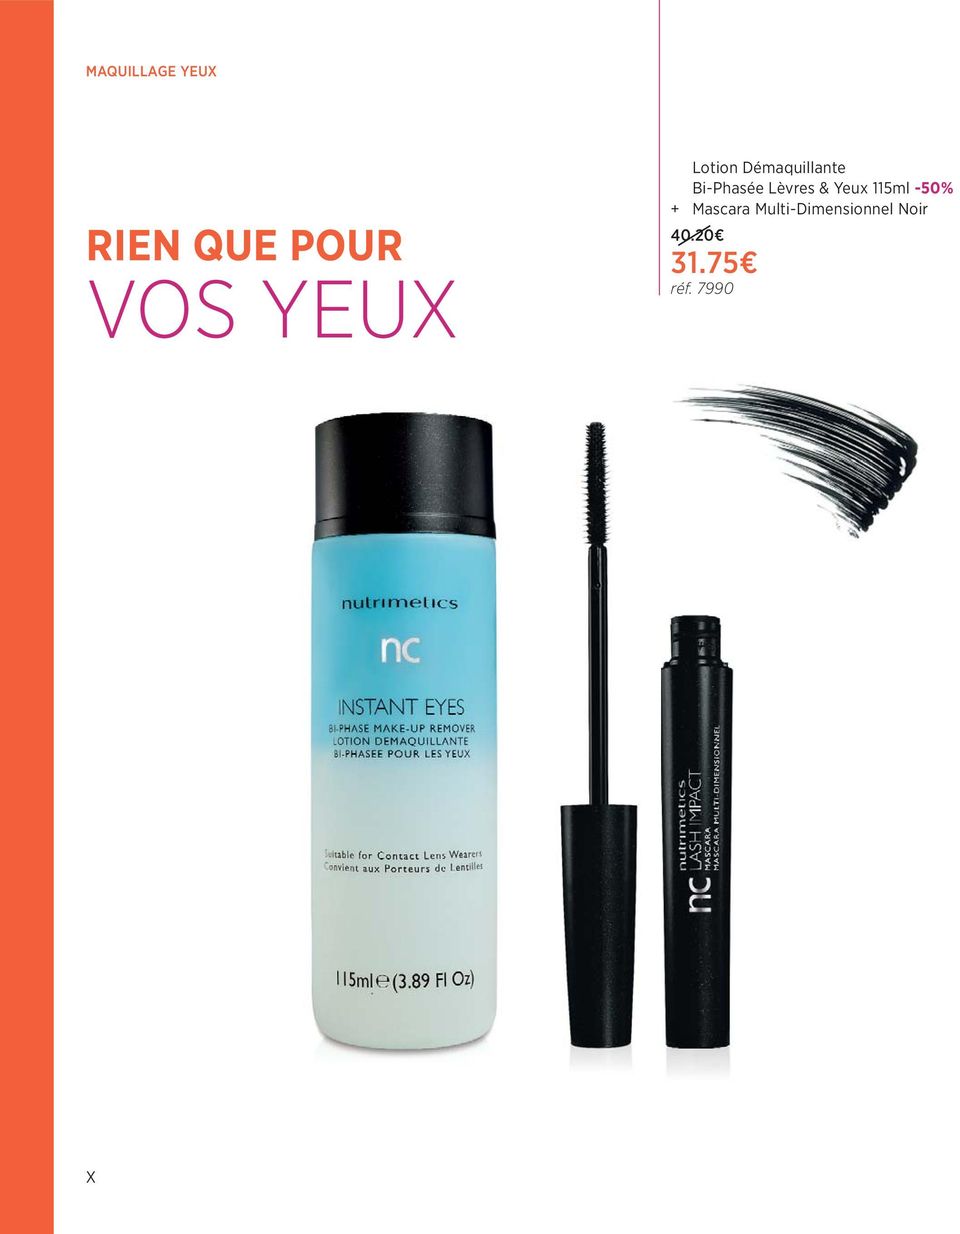 Lèvres & Yeux 115ml -50% + Mascara